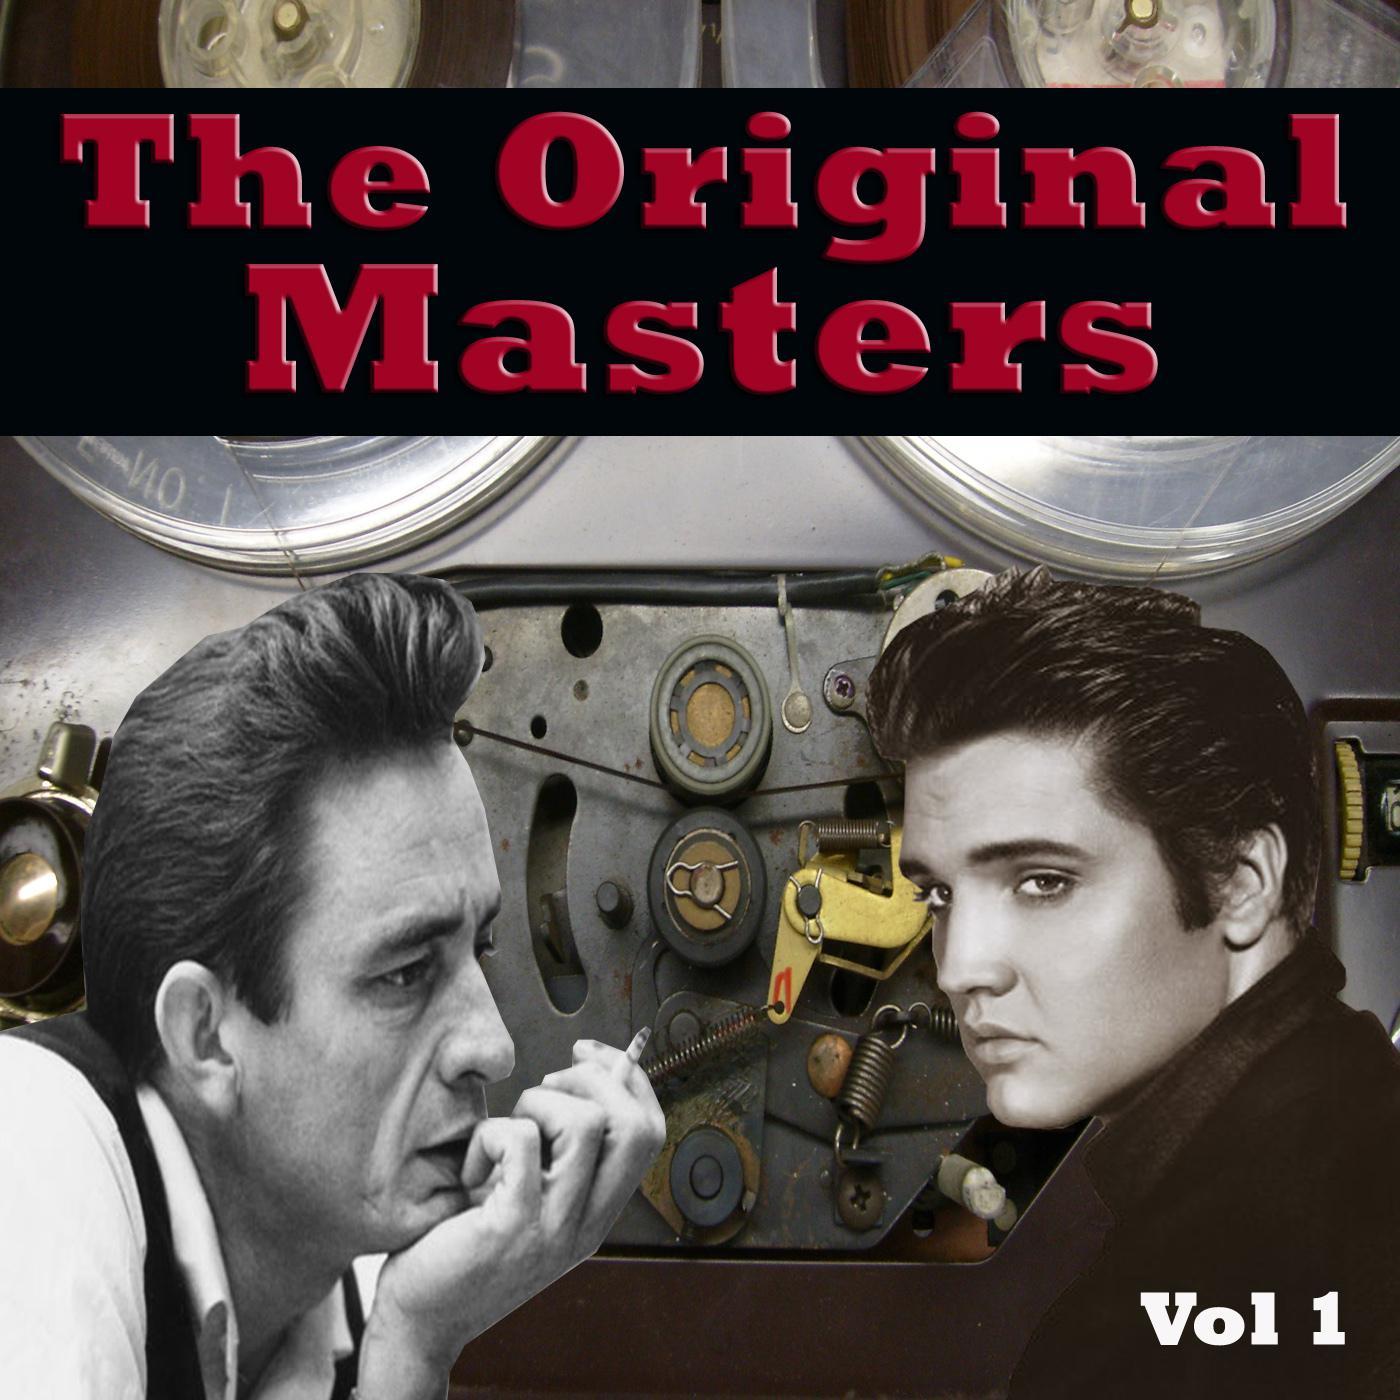 The Original Masters Vol 1